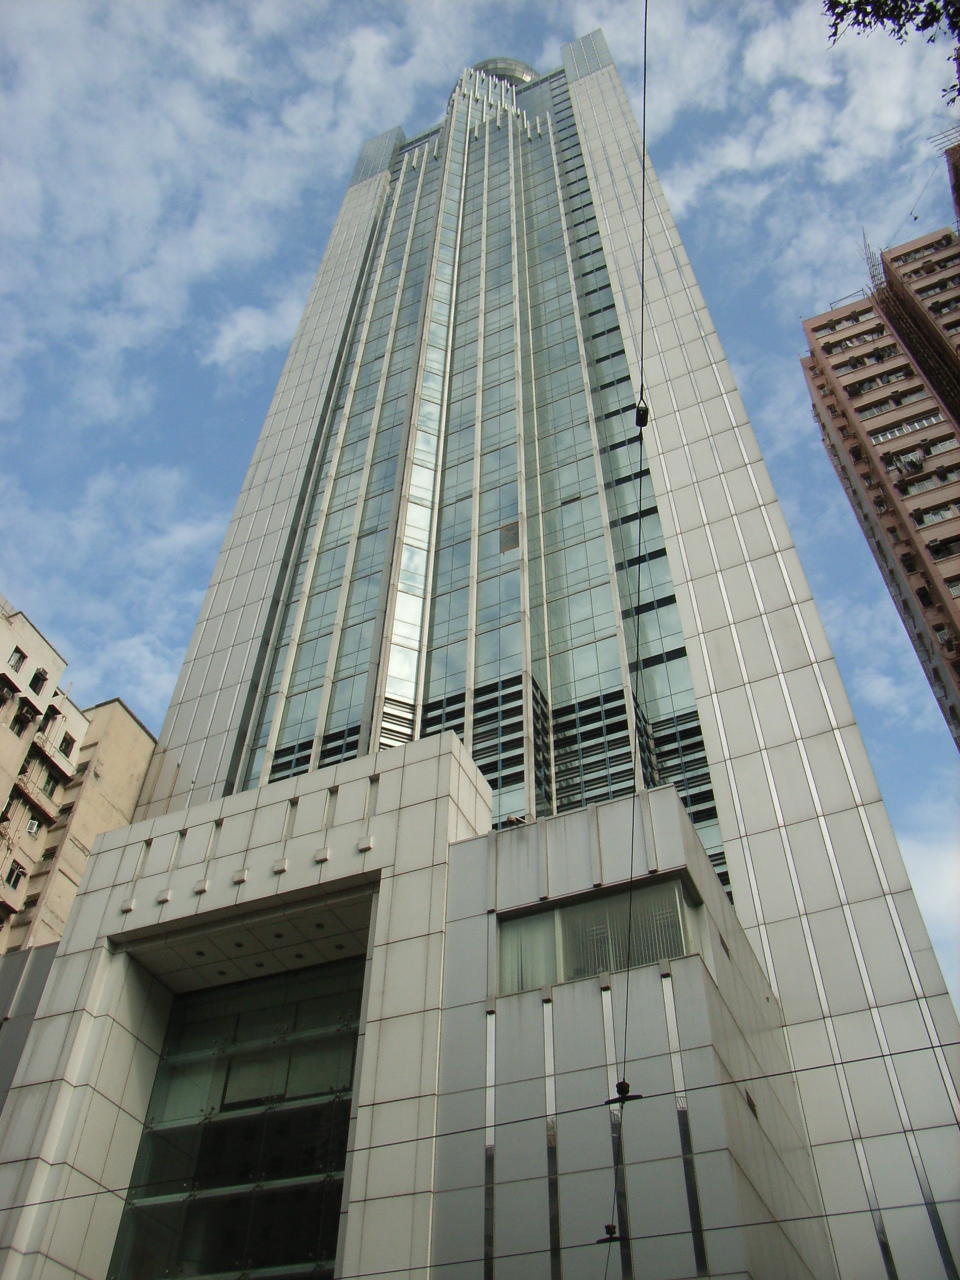 The [[Hong Kong Liaison Office